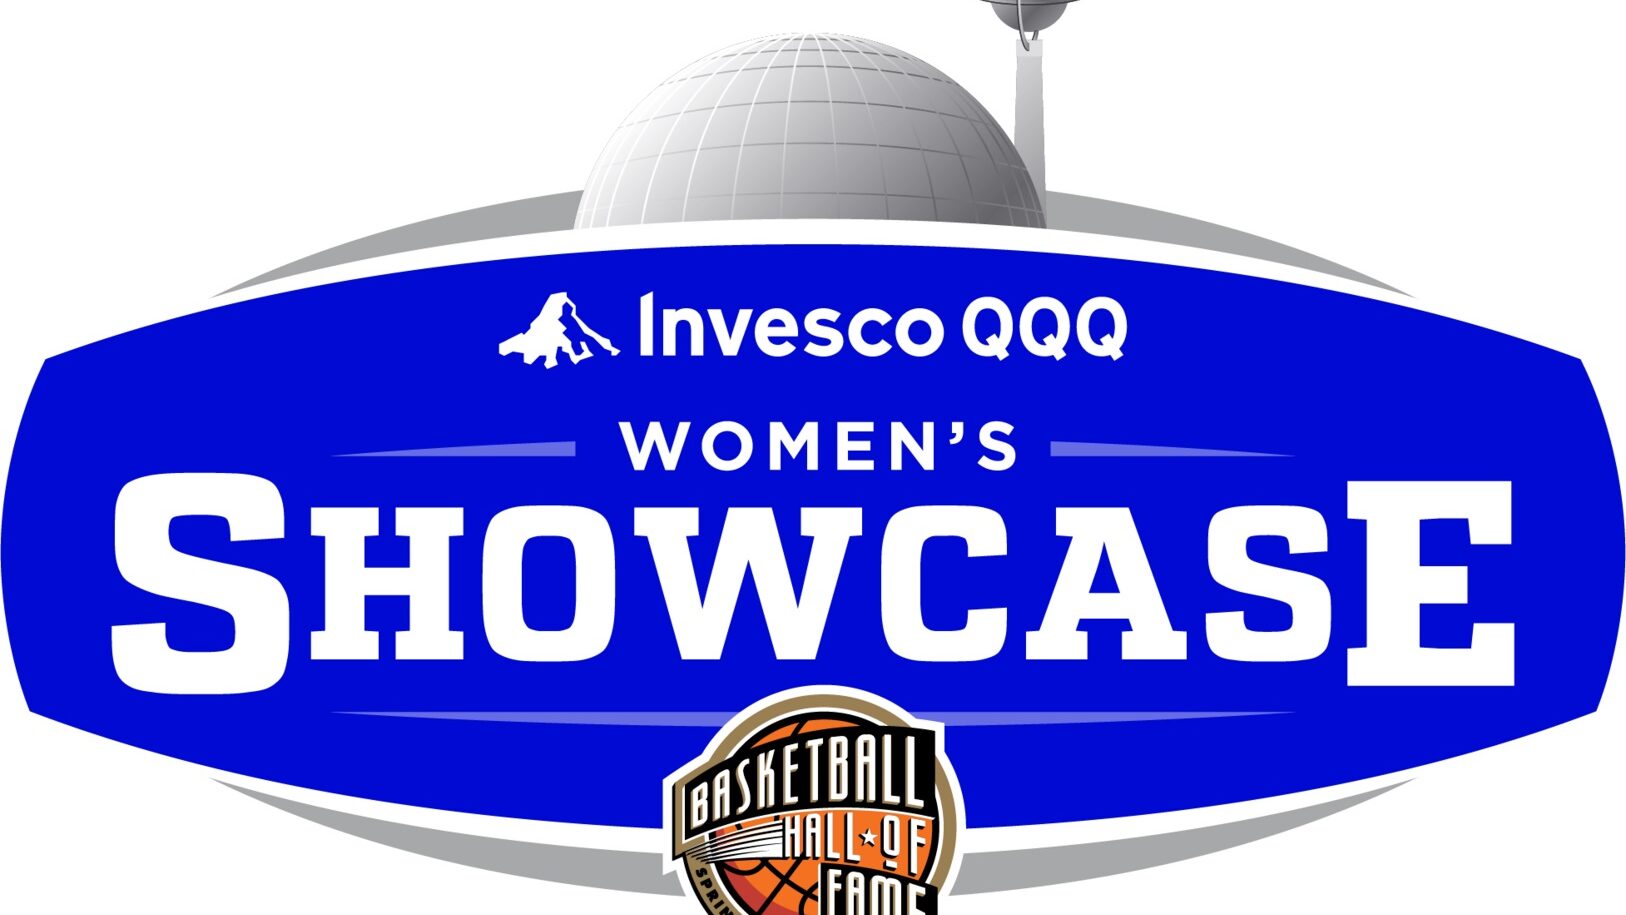 Invesco QQQ Basketball Hall Of Fame Women's Showcase